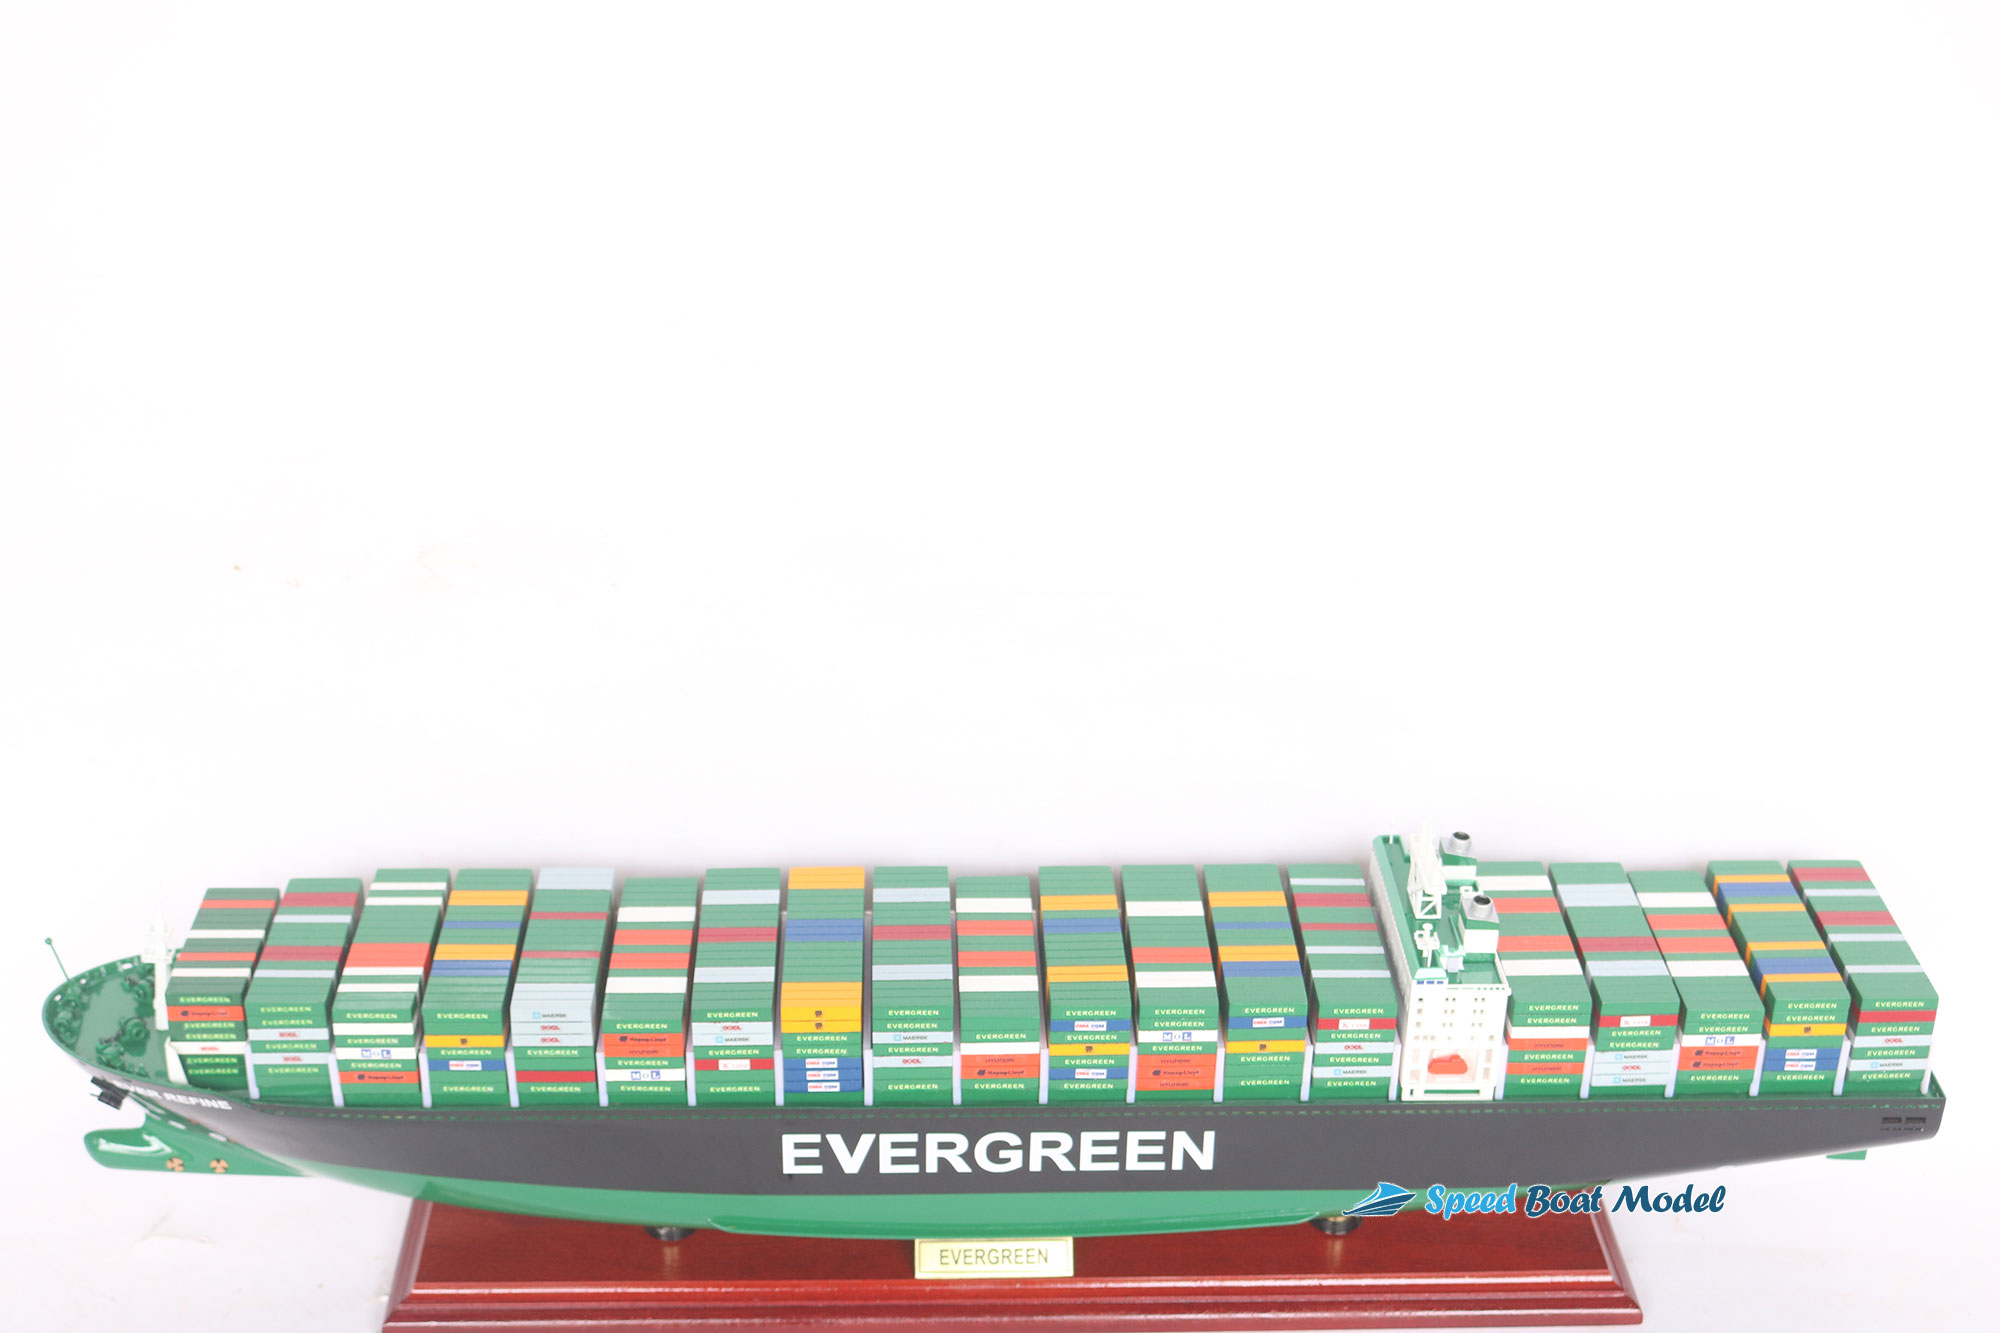 Evergreen Commercial Ship Model